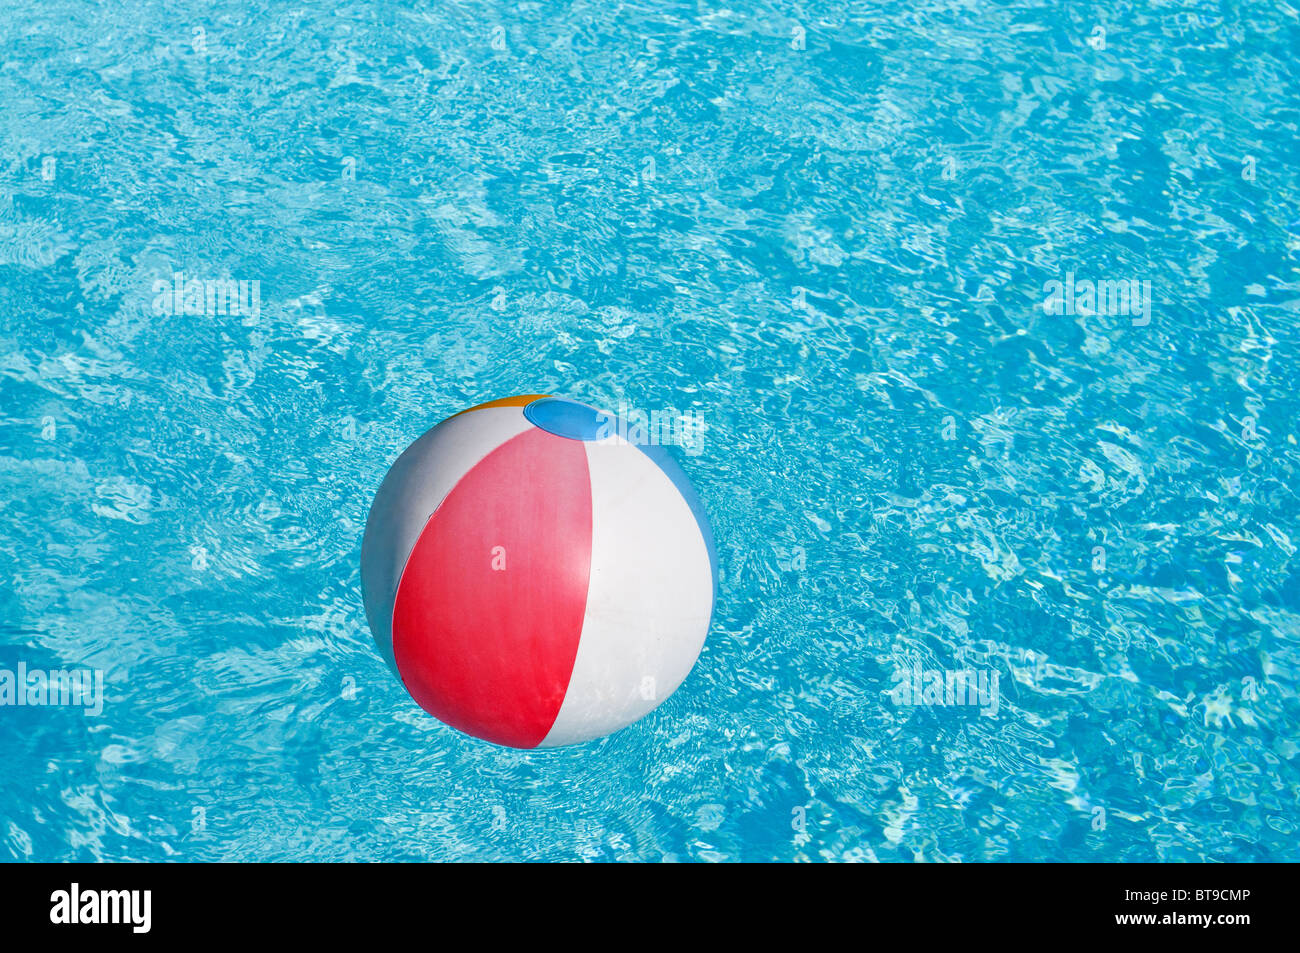 Un ballon de plage floating in a swimming pool Banque D'Images